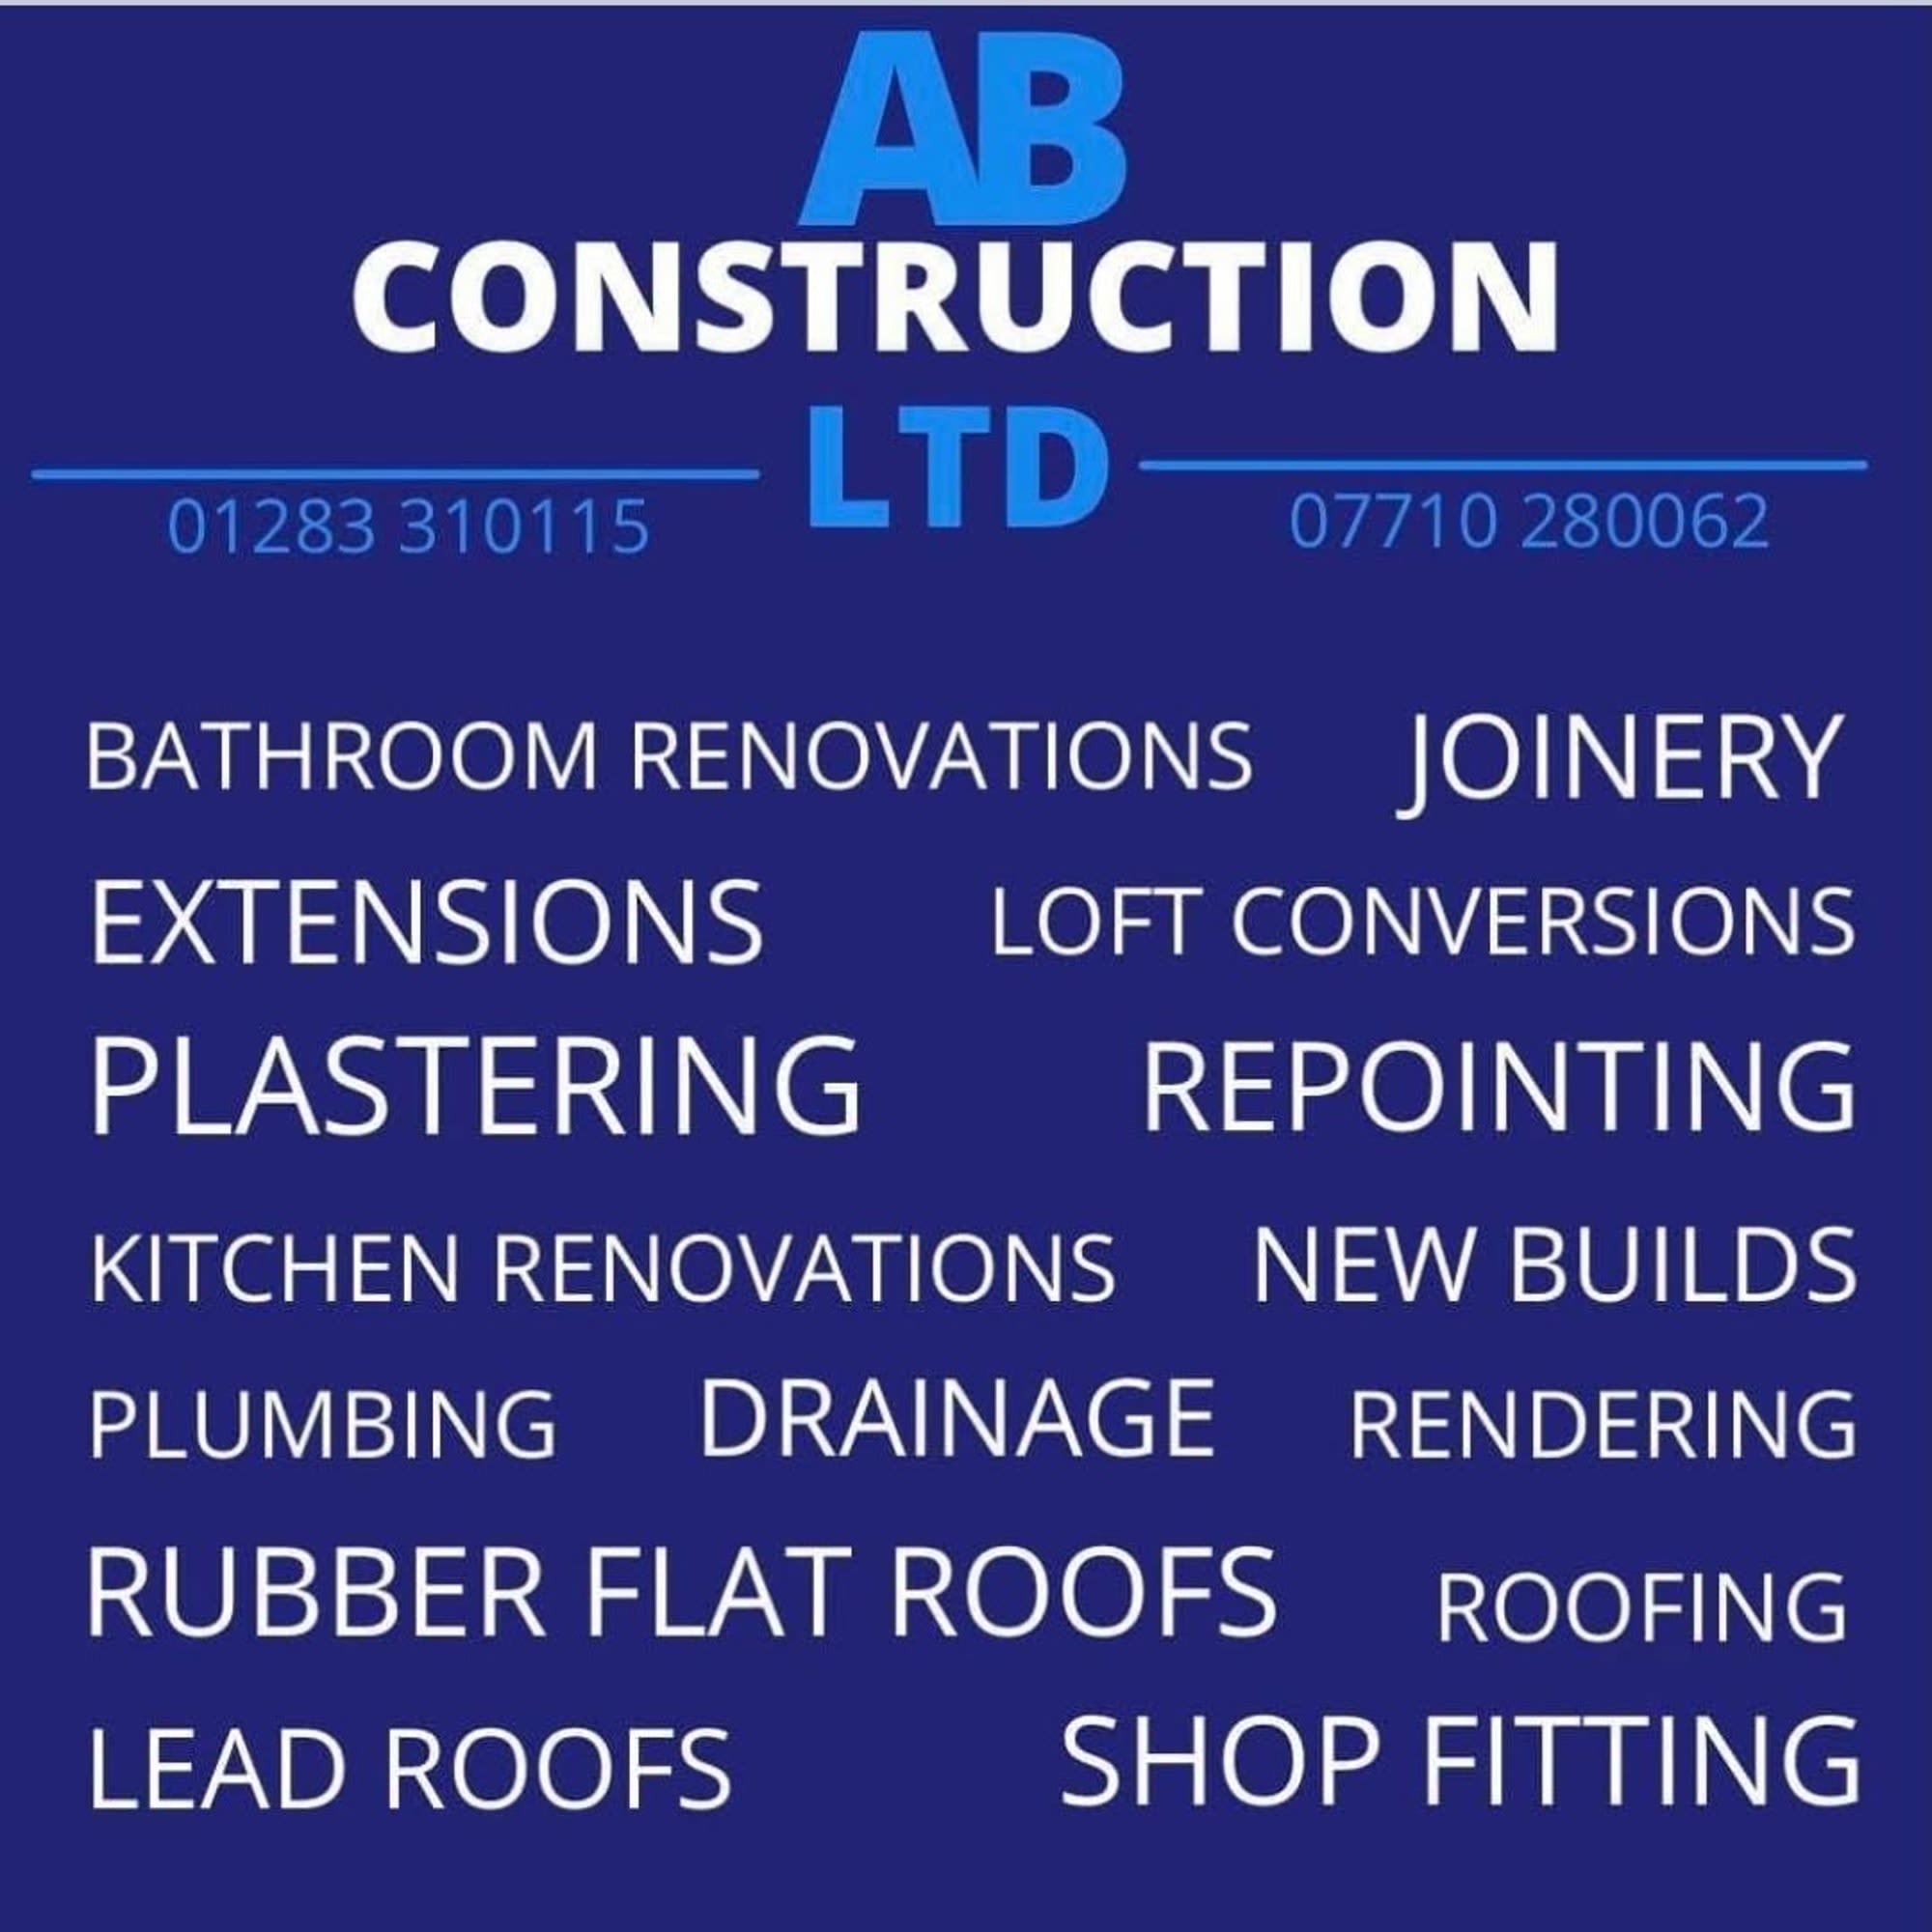 AB CONSTRUCTION U.K L.T.D